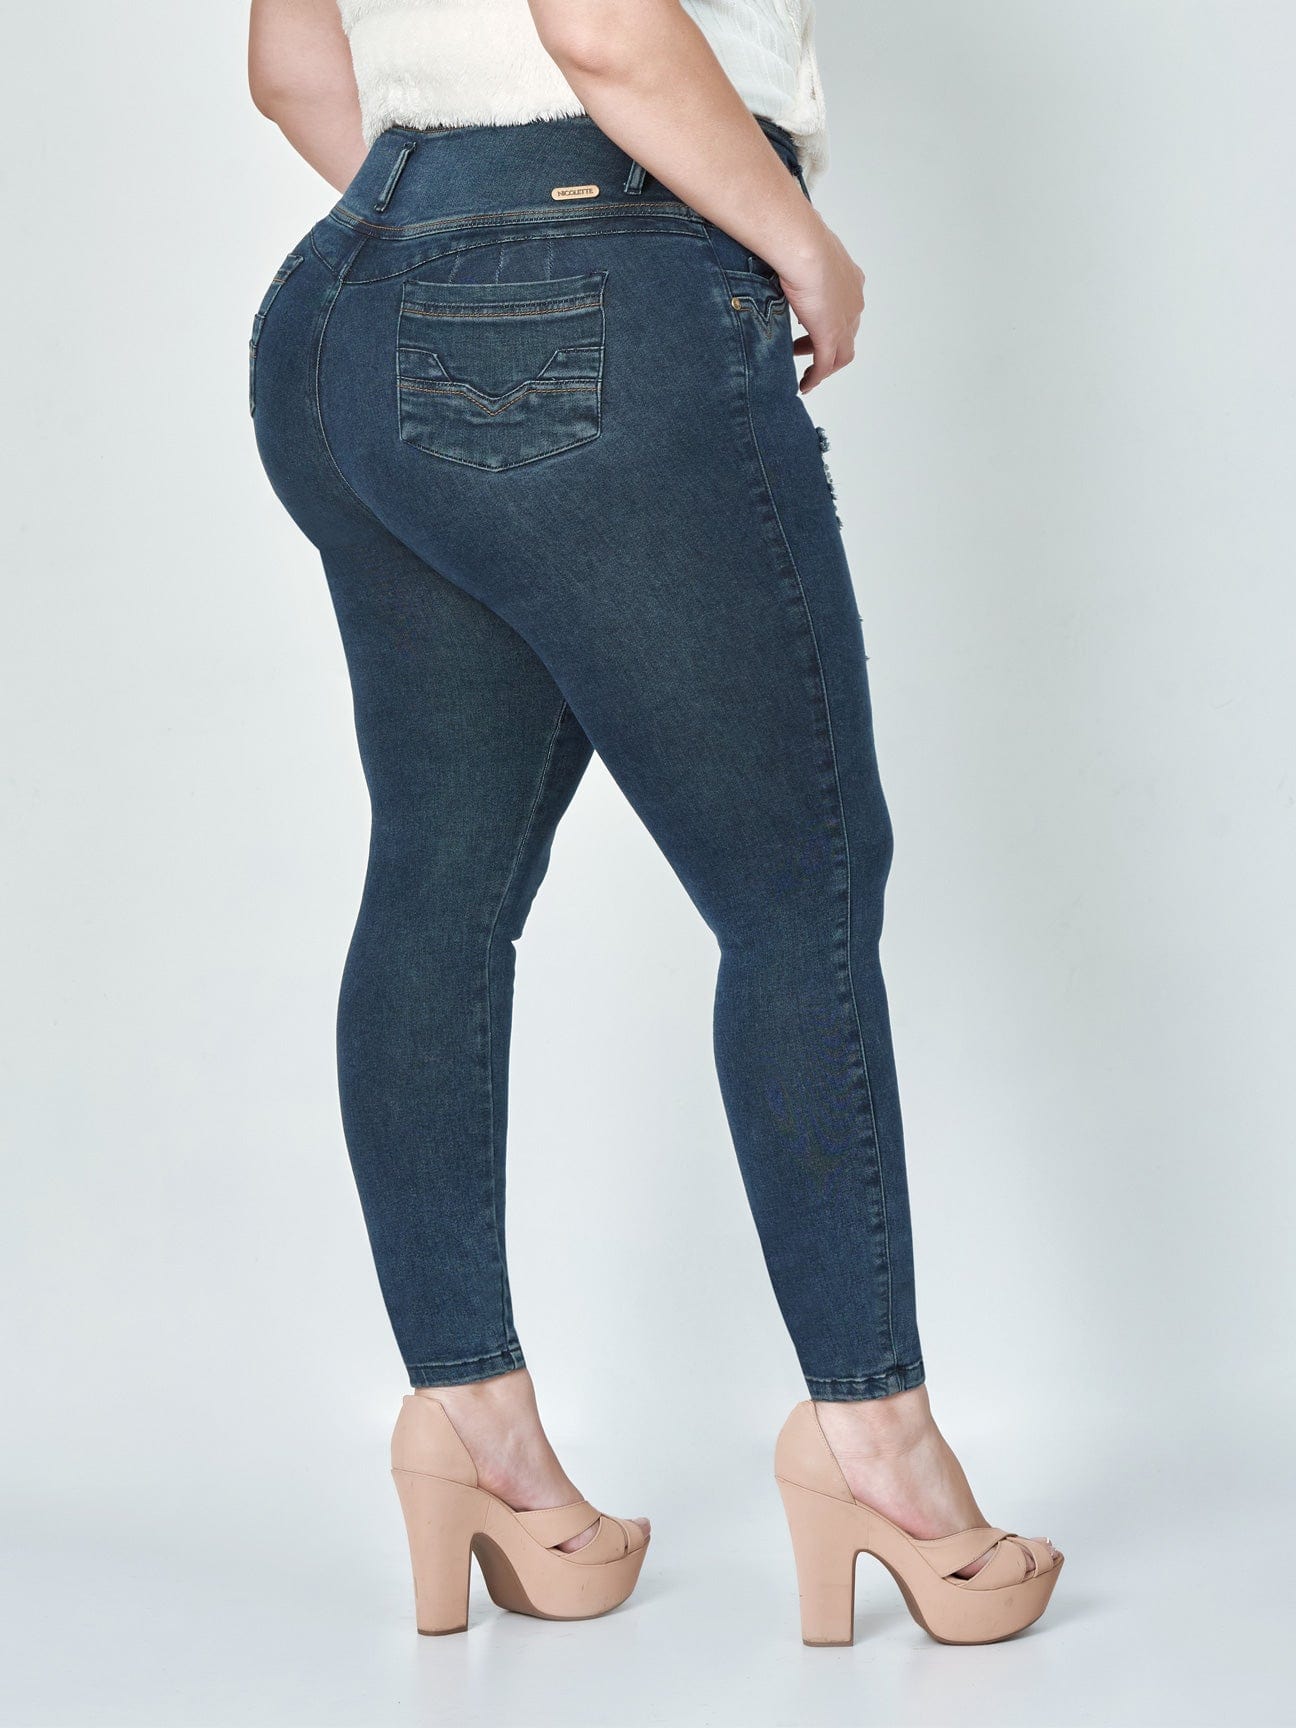 Sasha Butt Lift Dark Blue Ripped Skinny Jeans lower body back view.